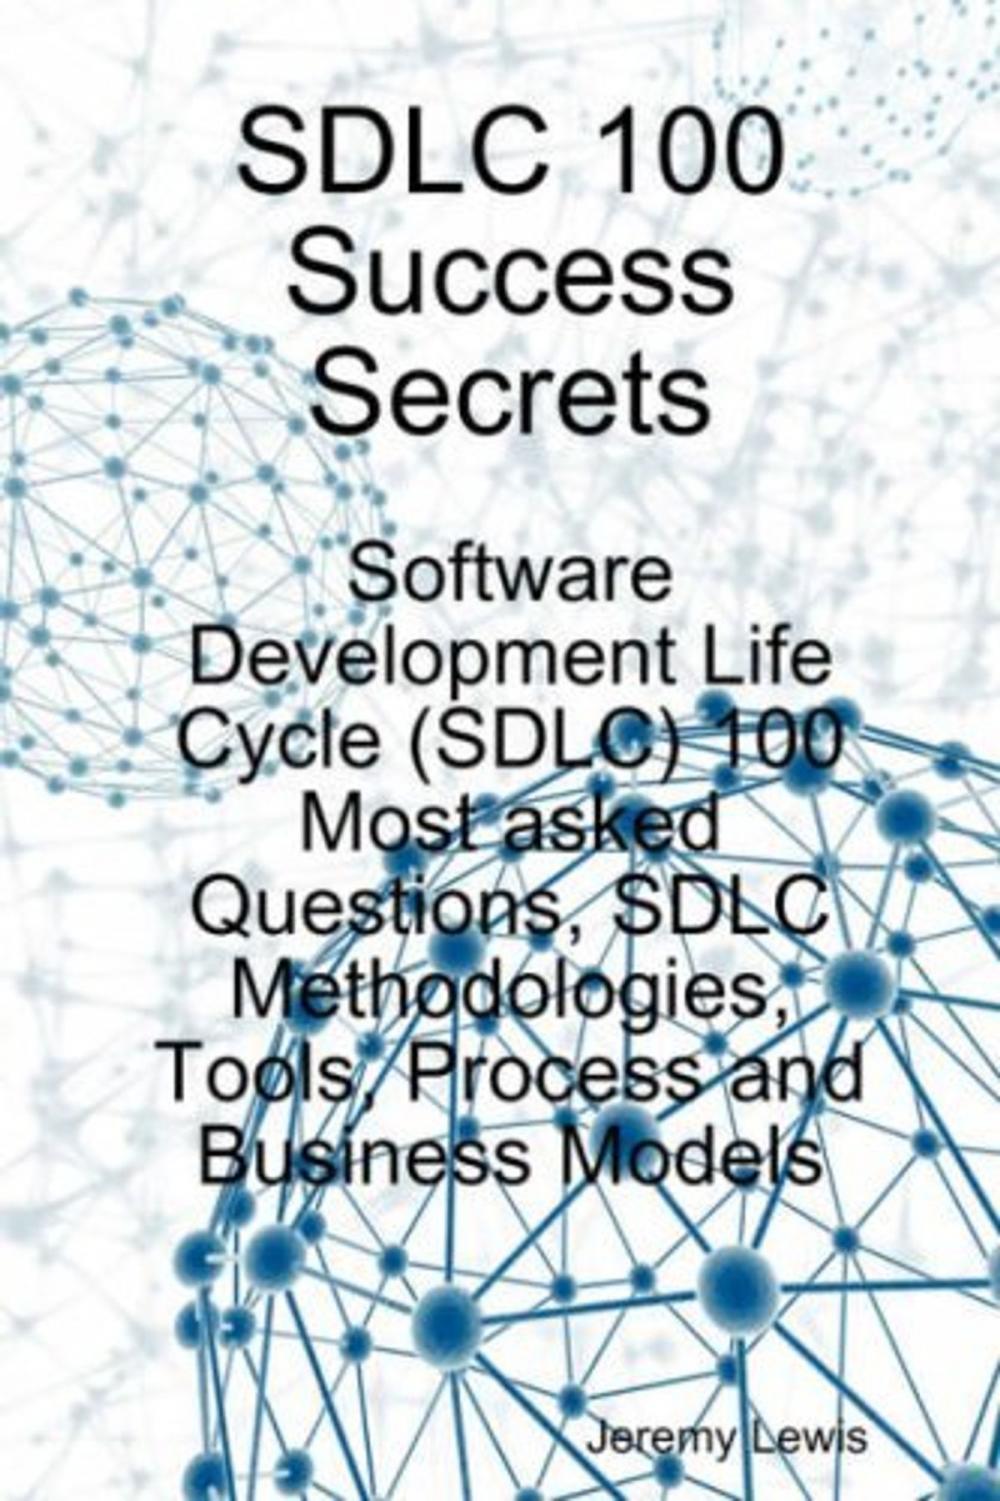 Big bigCover of SDLC 100 Success Secrets - Software Development Life Cycle (SDLC) 100 Most asked Questions, SDLC Methodologies, Tools, Process and Business Models